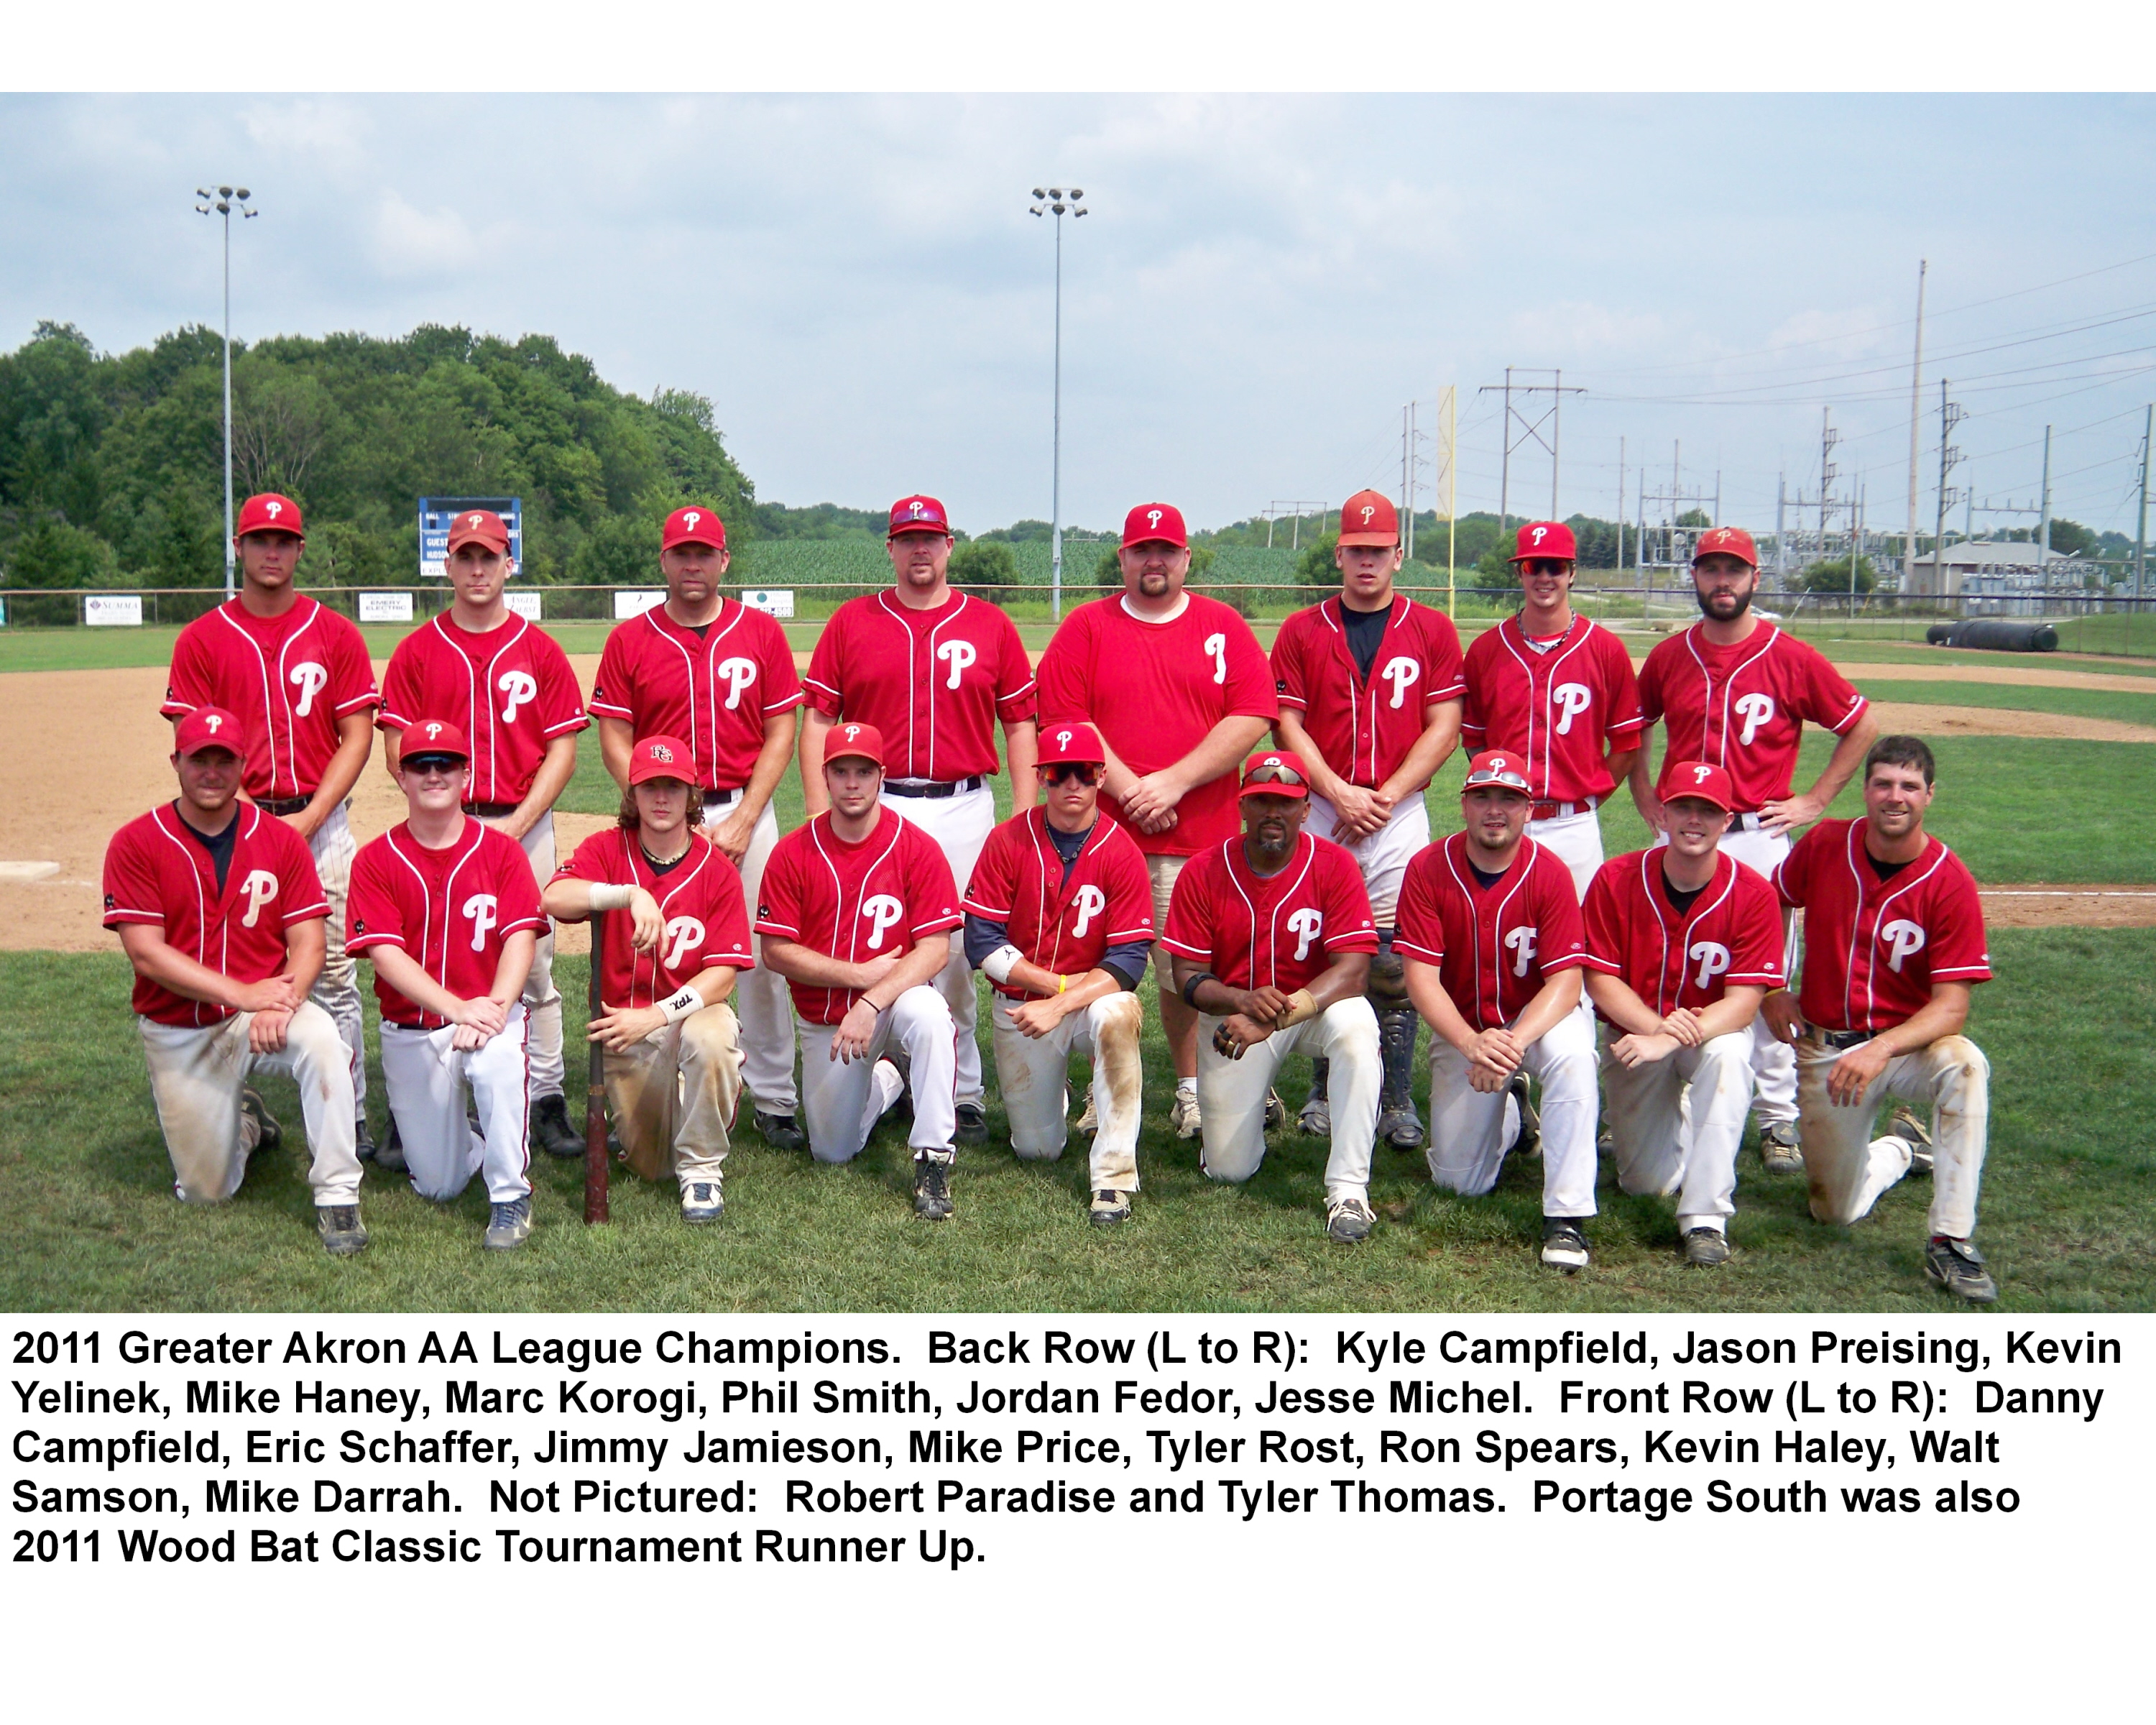 2011 Portage South Baseball Team